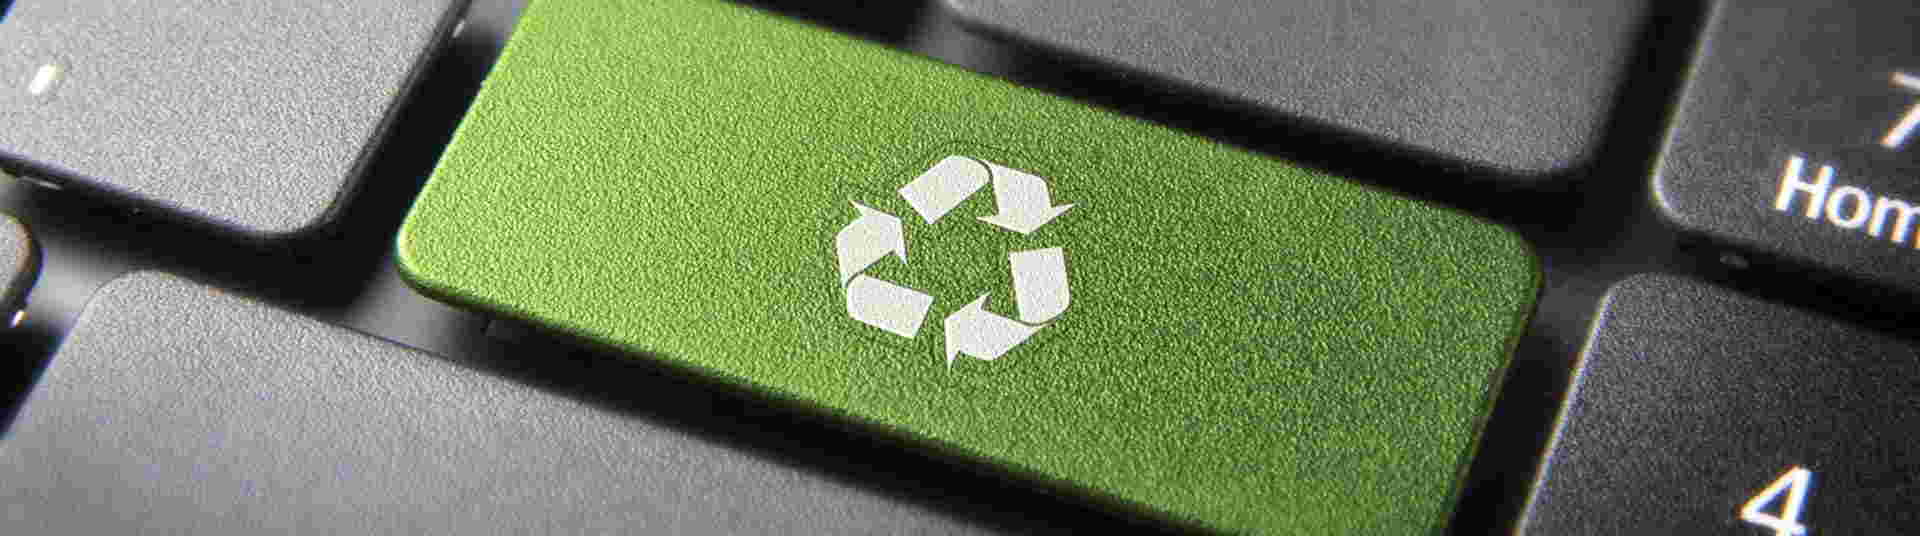 Secure Data Destruction Process | TechWaste Recycling